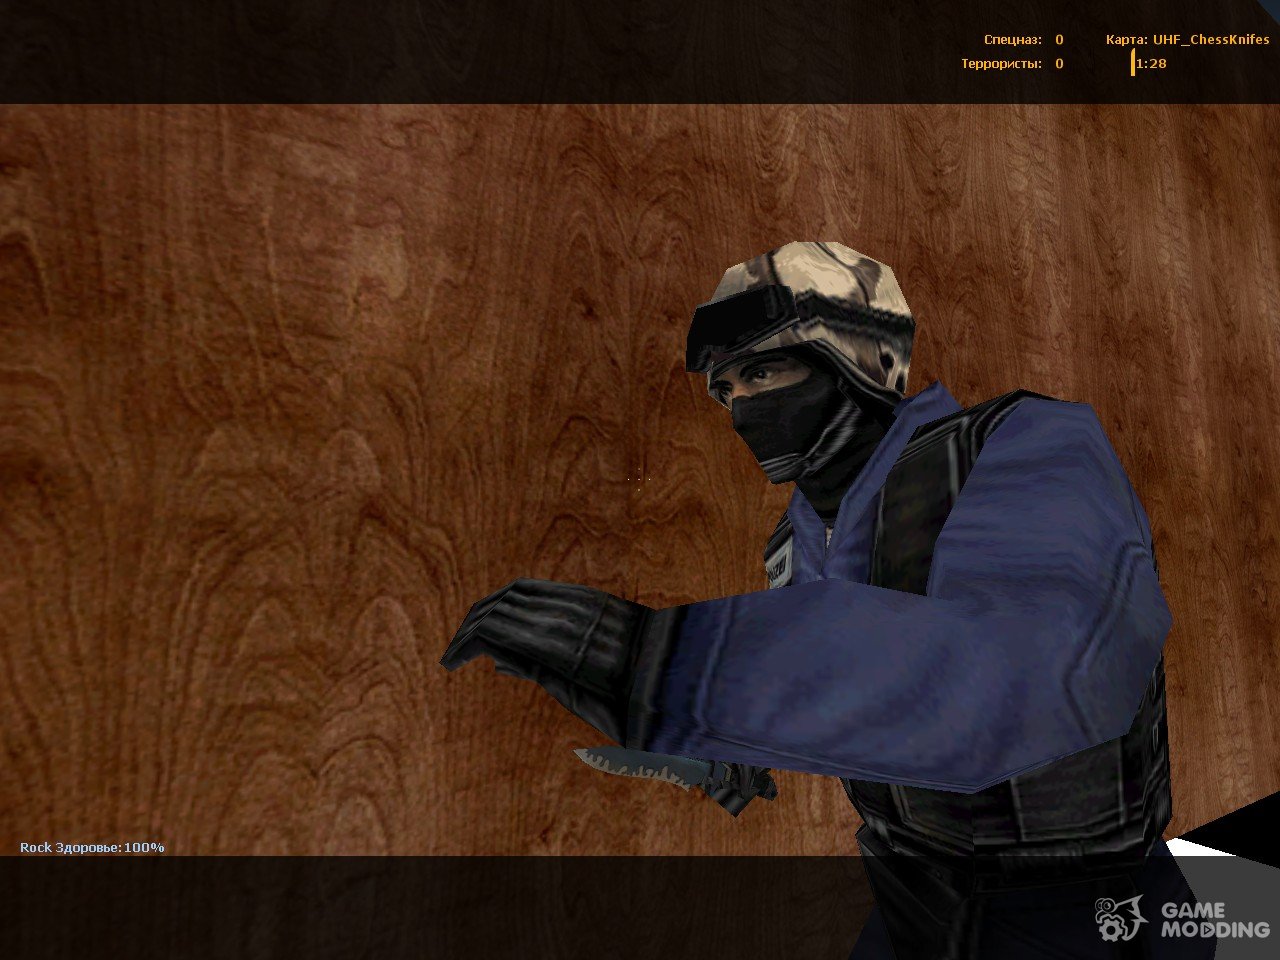 Skins do playes GSG-9 para CS 1.6 - Counter-Strike Brasil